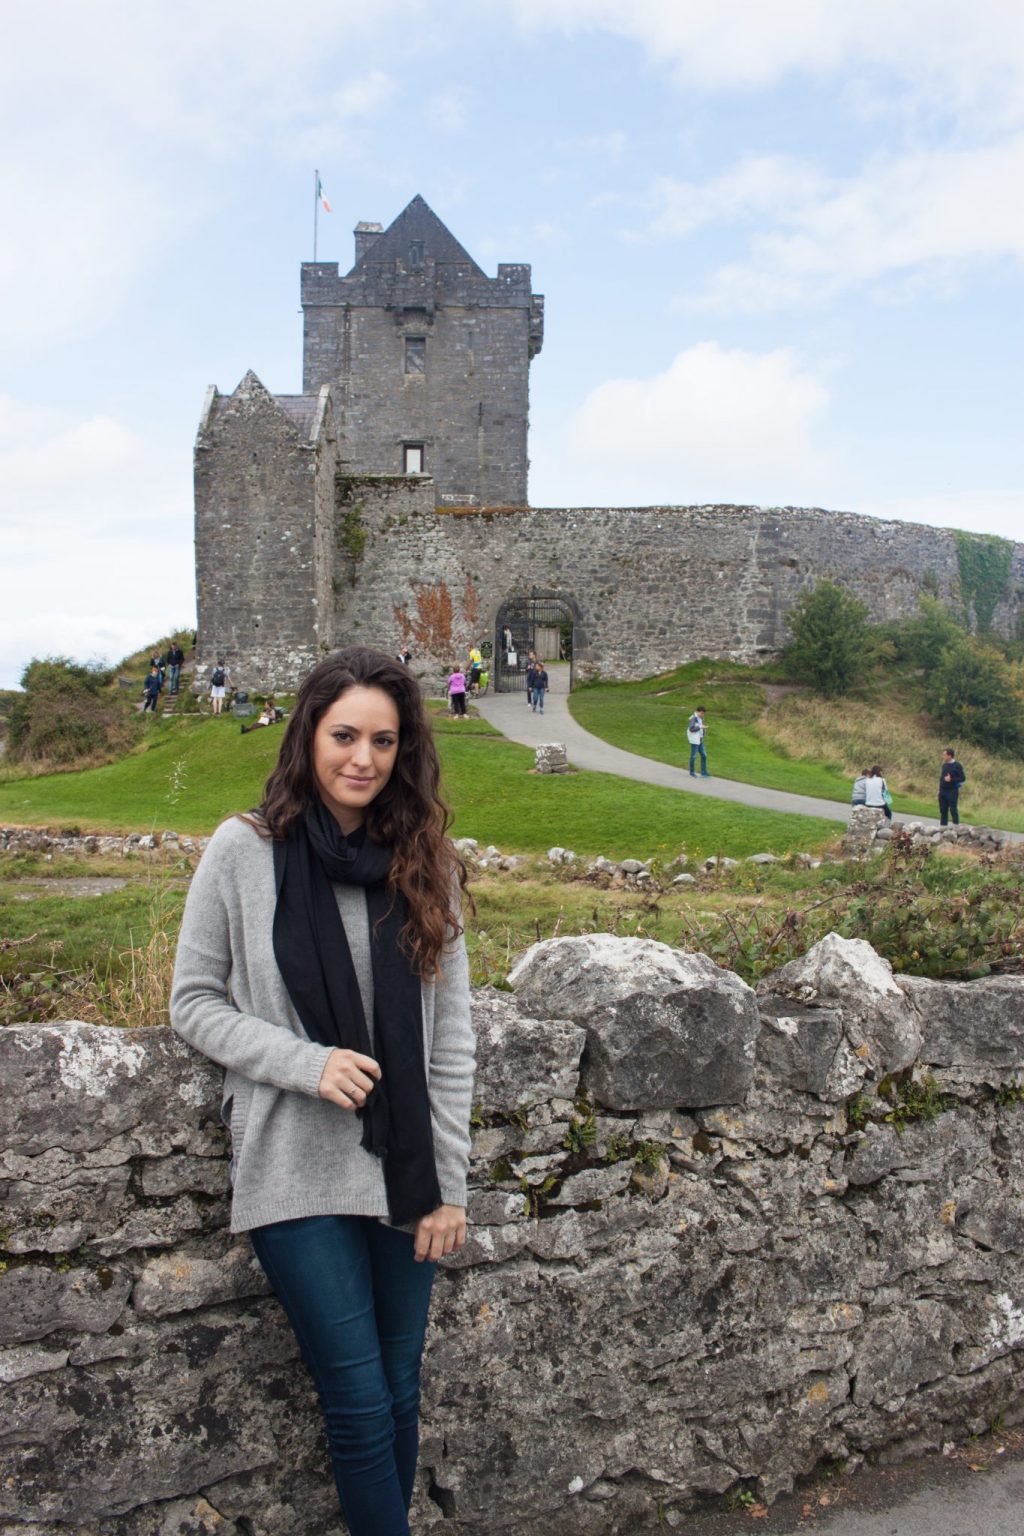 western ireland roadtrip, western ireland countryside, irish cottage, abandoned castle, fir trees, Galway, irish castles